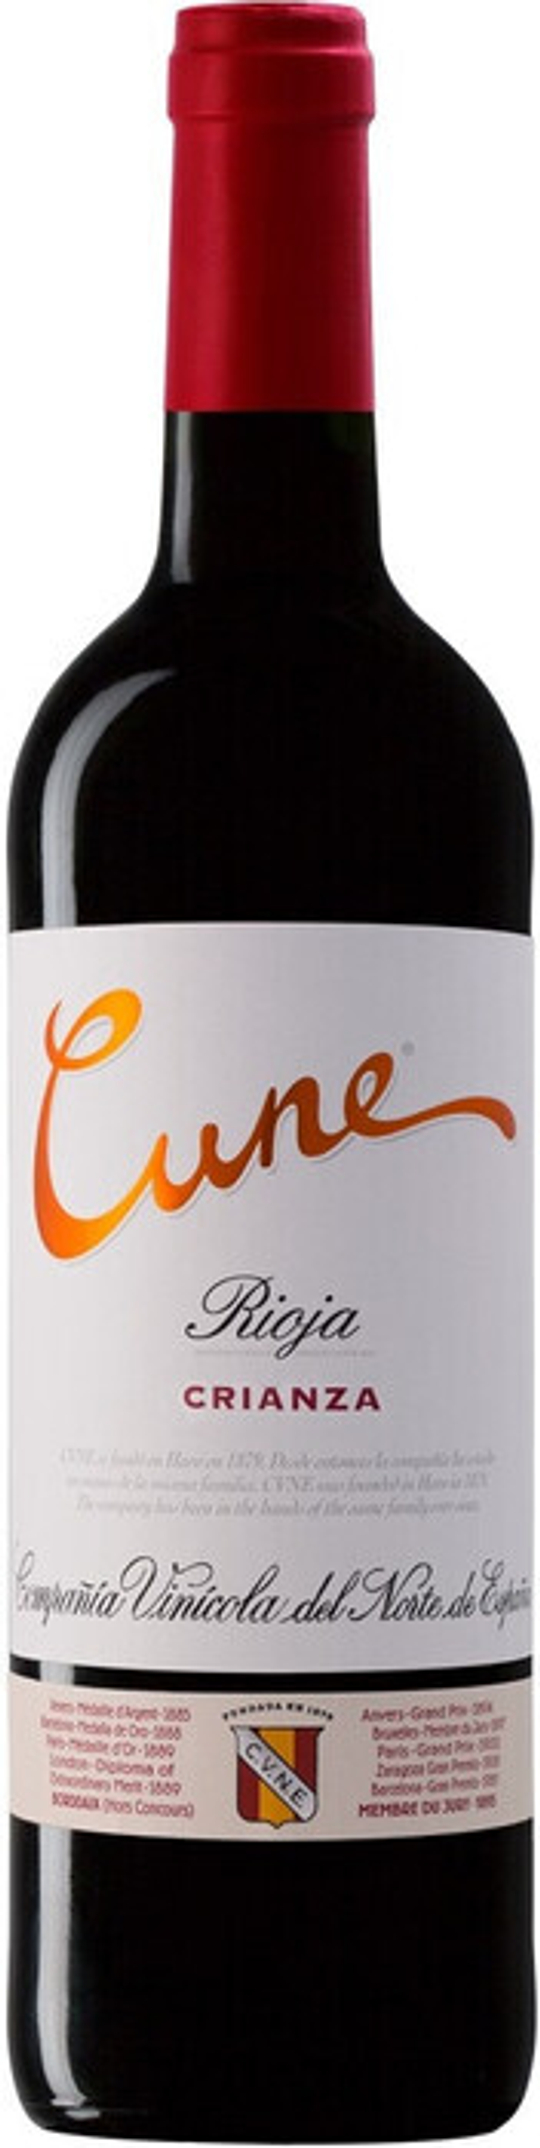 Вино Cune Crianza Rioja DOC, 0,75 л.